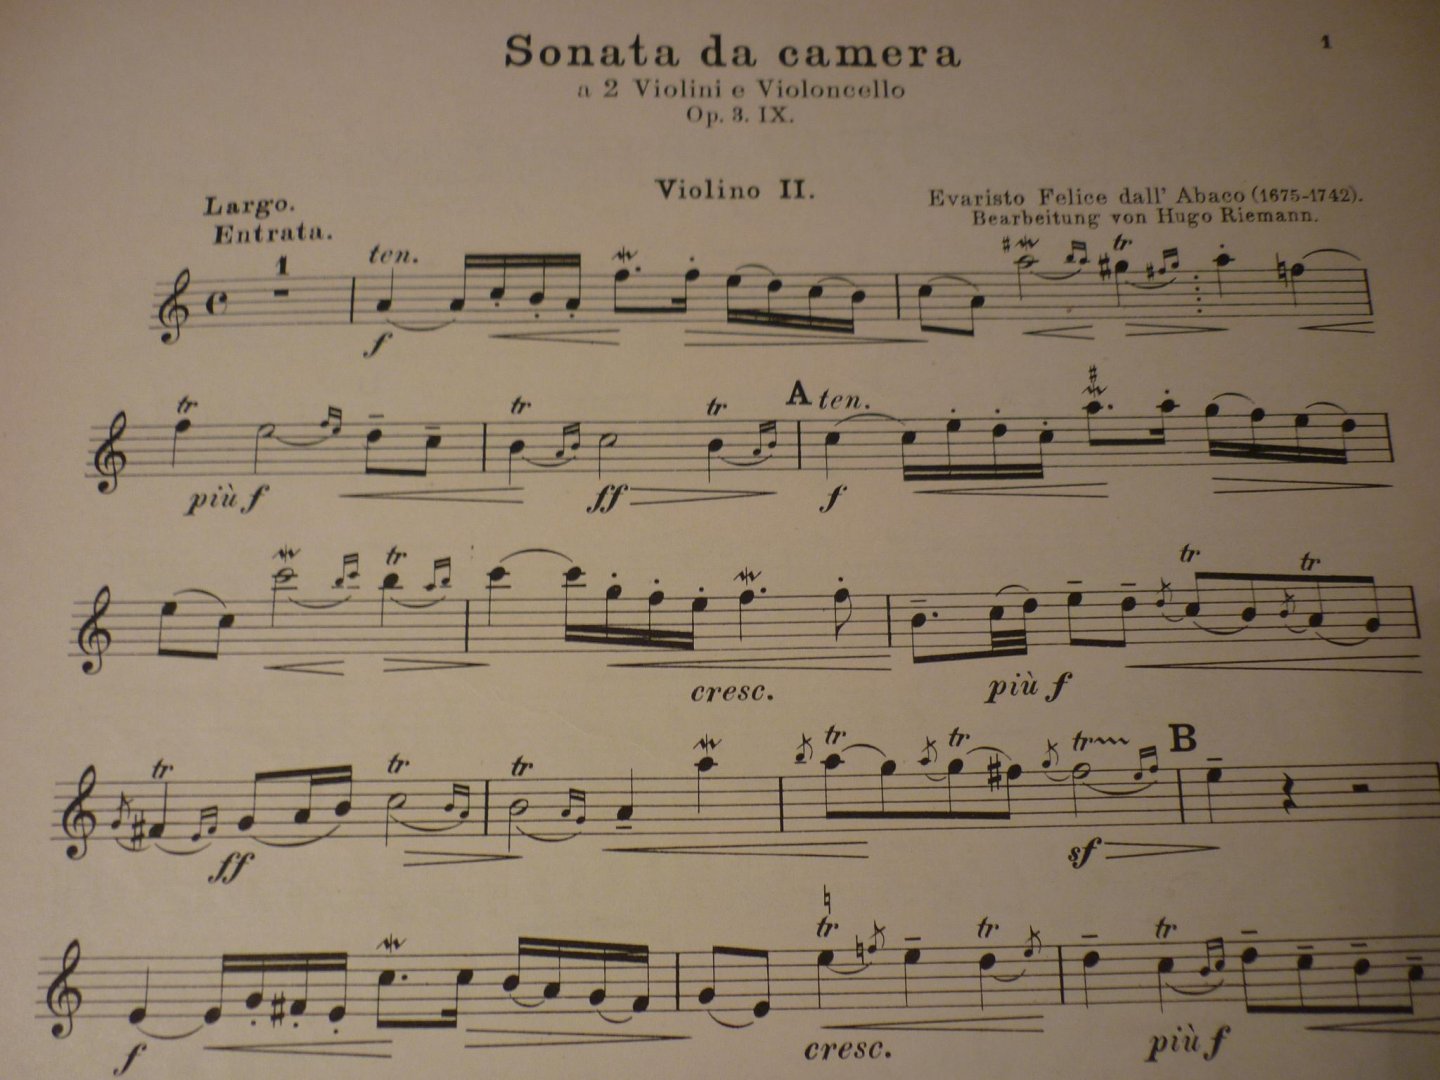 Dall' Abaco (1675 - 1742) - Sonata da camera A moll Op. 3 No. 9; (herausgegeben von Hugo Riemann) Serie: Collegium Musicum No. 43